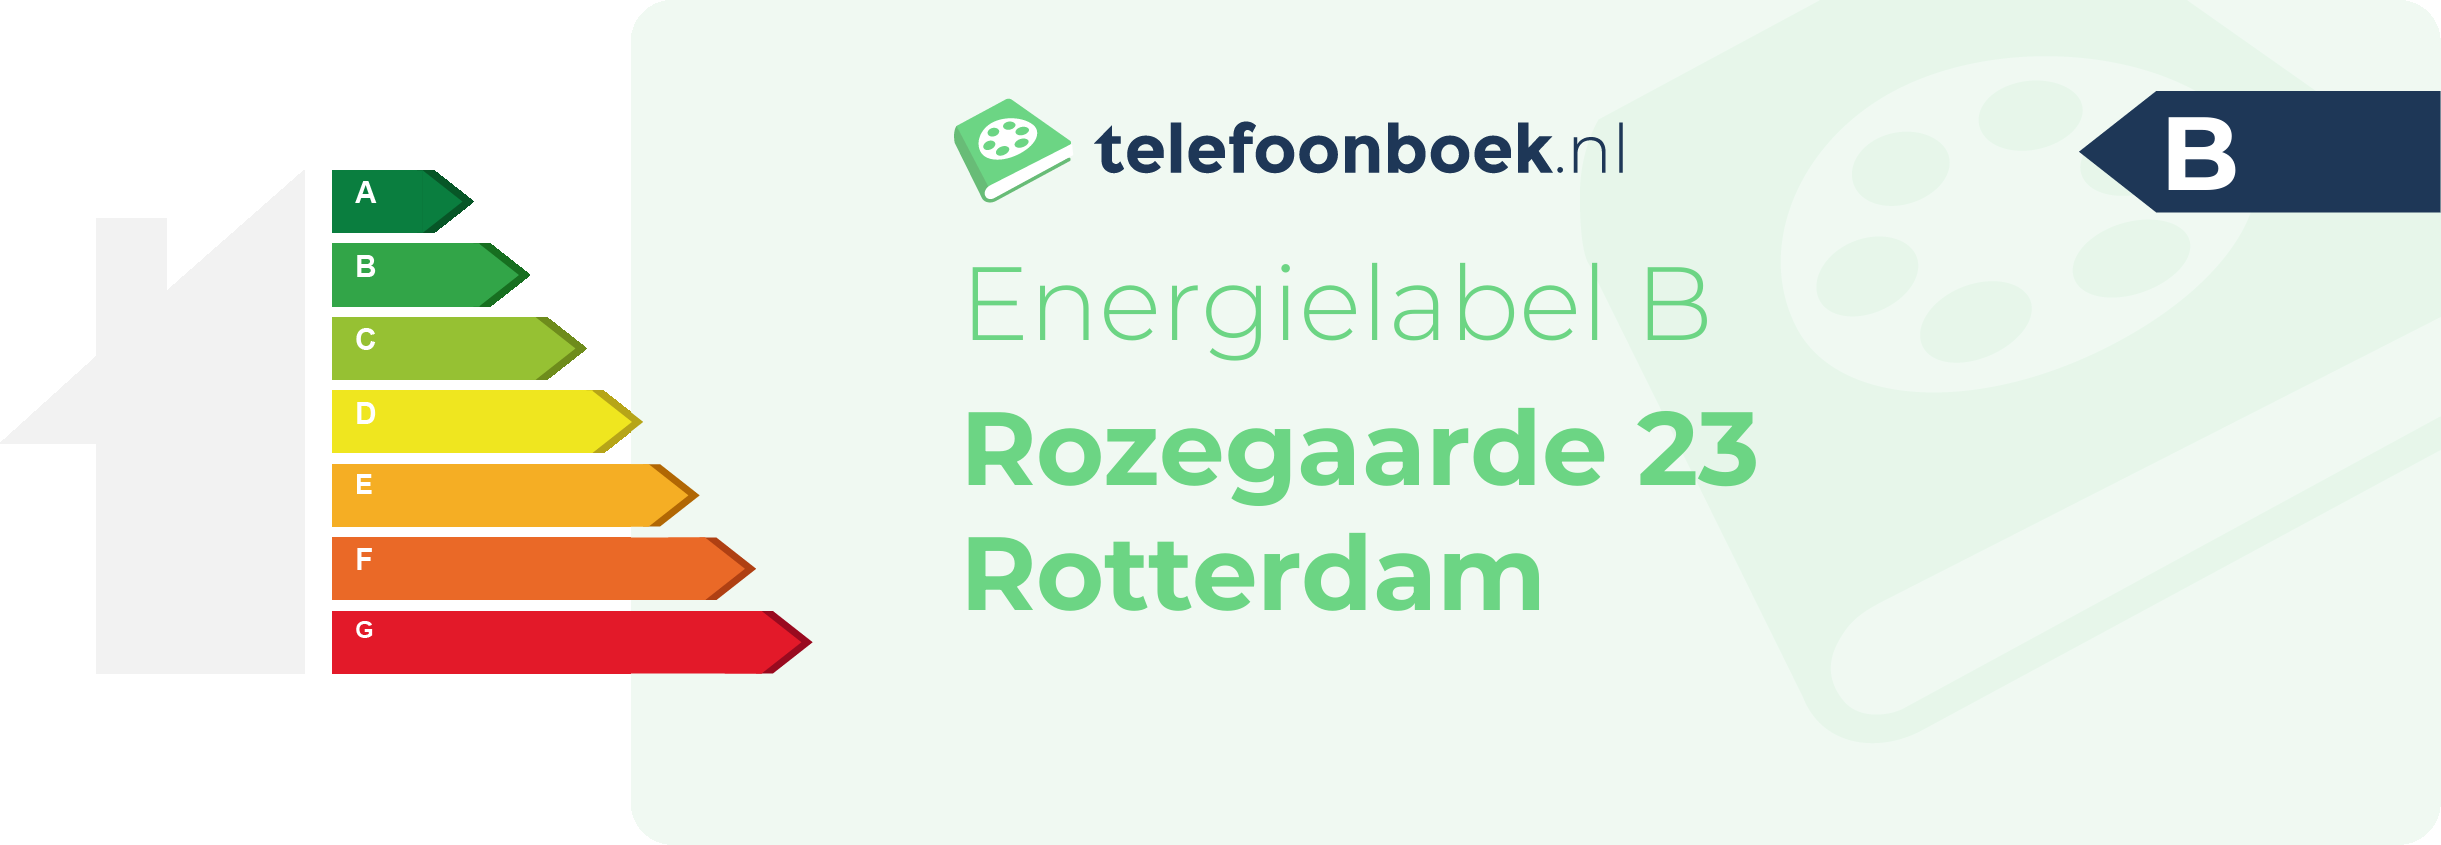 Energielabel Rozegaarde 23 Rotterdam